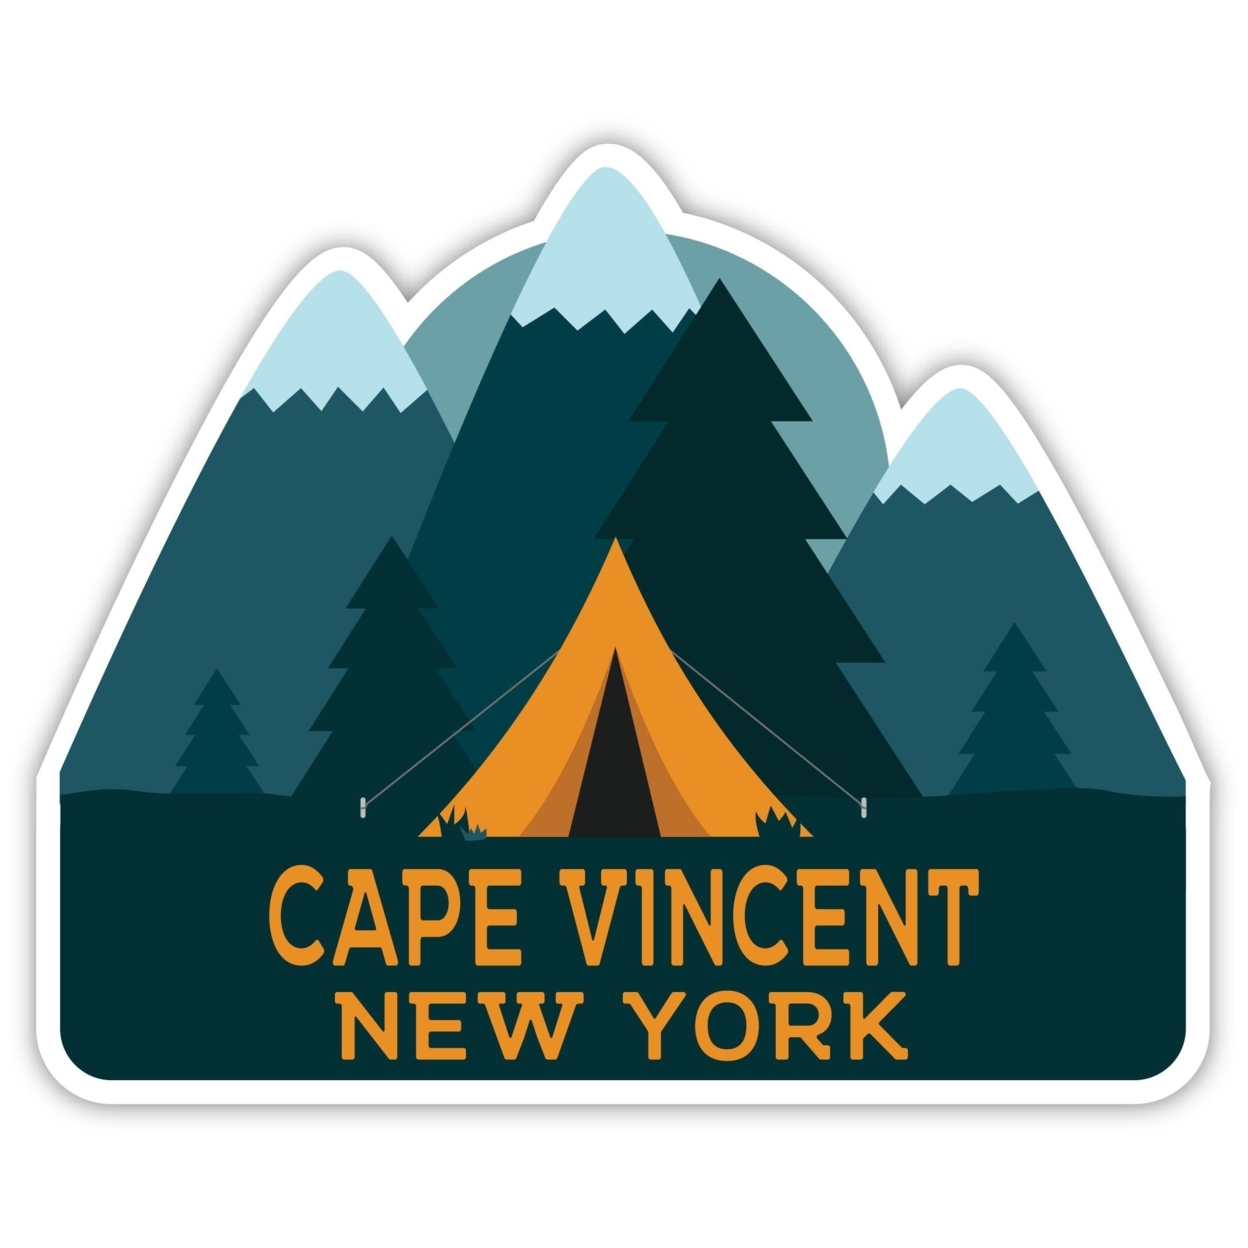 Cape Vincent New York Souvenir Decorative Stickers (Choose Theme And Size) - 4-Pack, 2-Inch, Tent